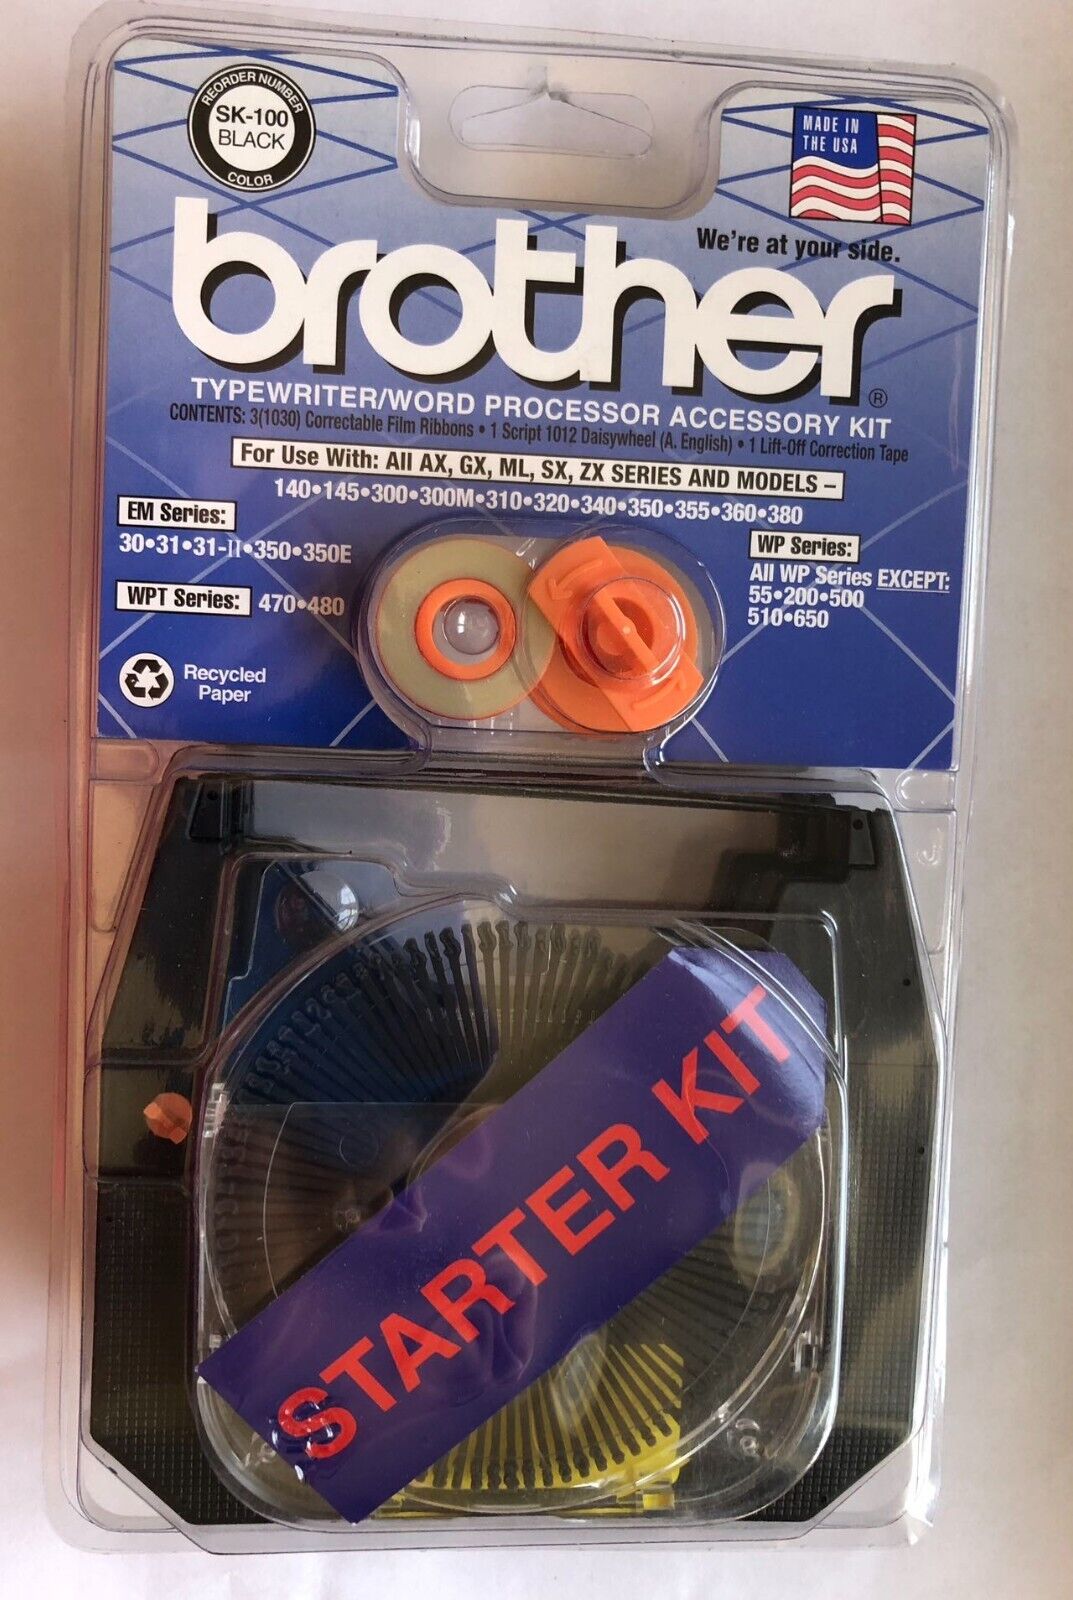 Brother SK-100 Starter Kit Typewriter Word Processor Accessory Kit